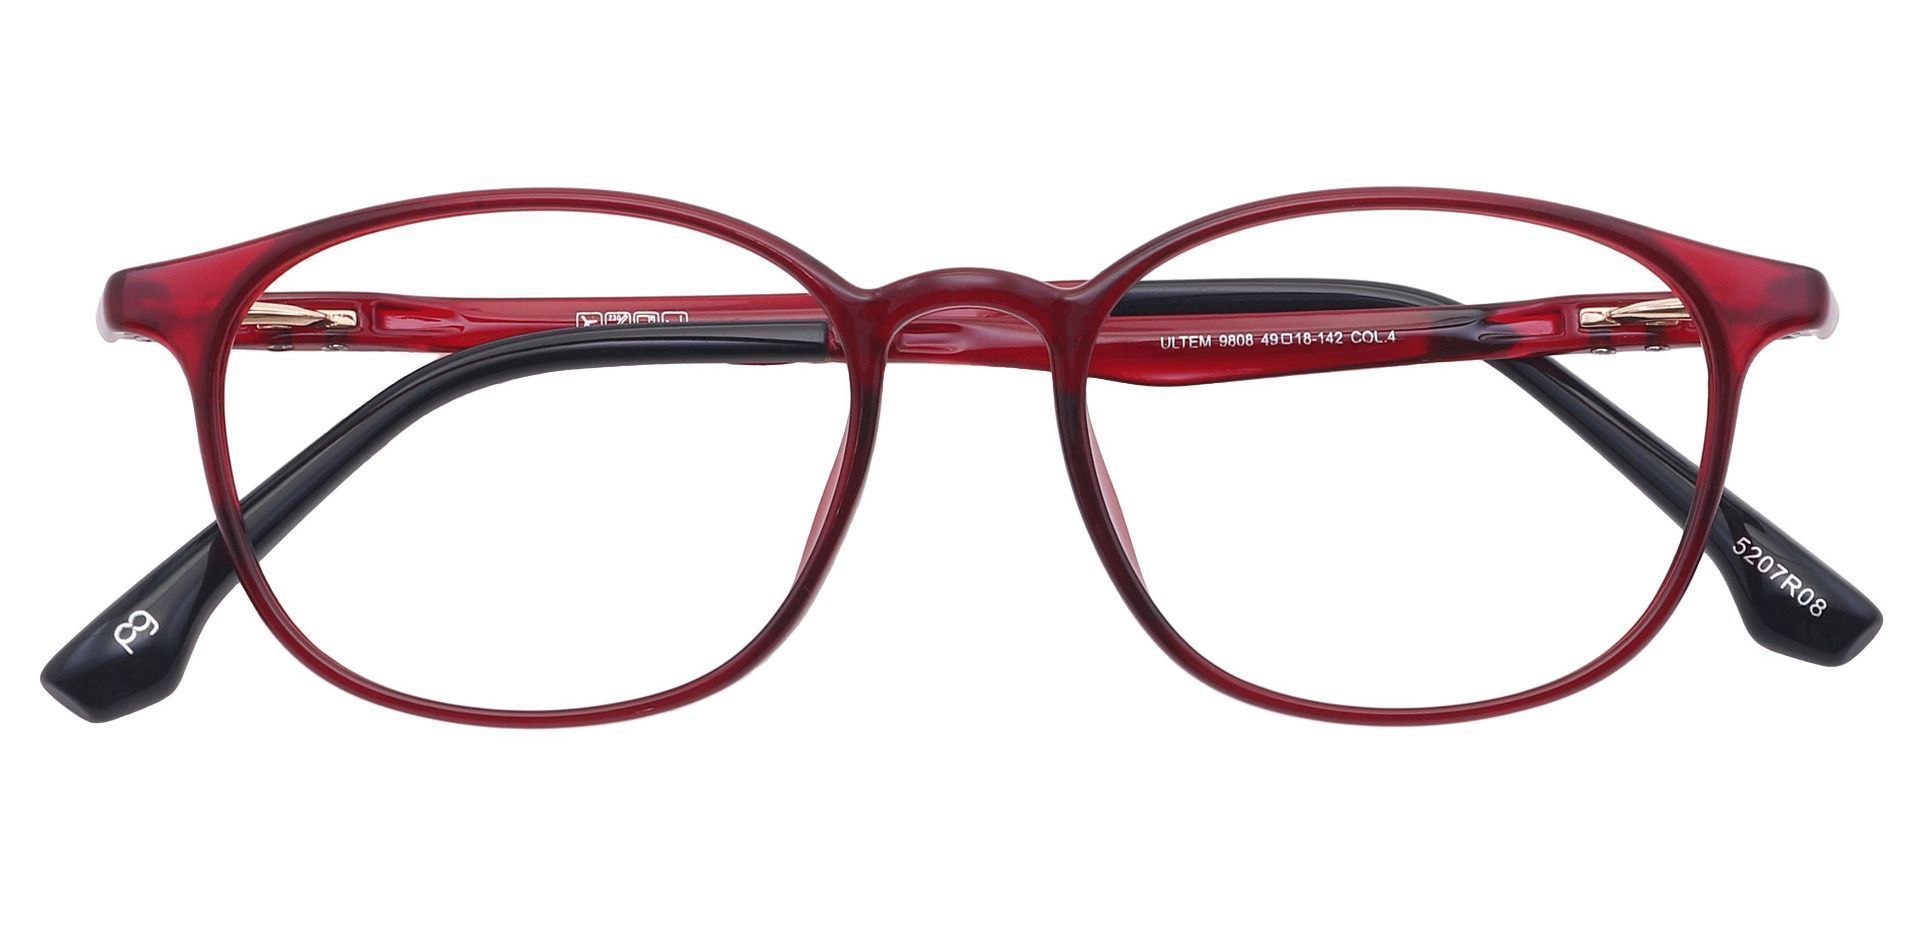 Shannon Oval Progressive Glasses - Red